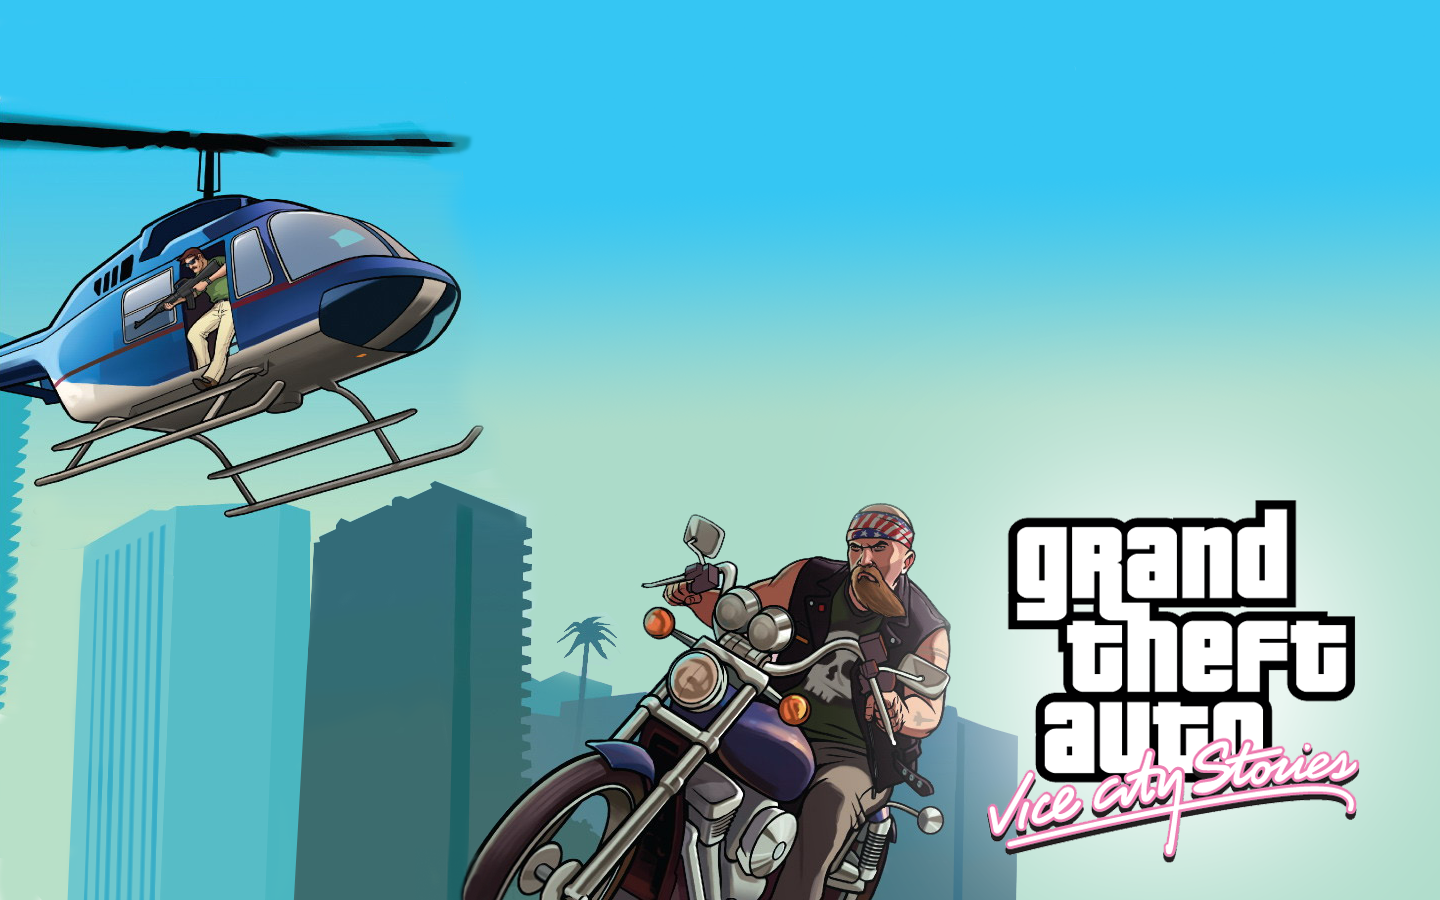 Grand Theft Auto - Gta Vice City Stories Wallpaper Hd , HD Wallpaper & Backgrounds